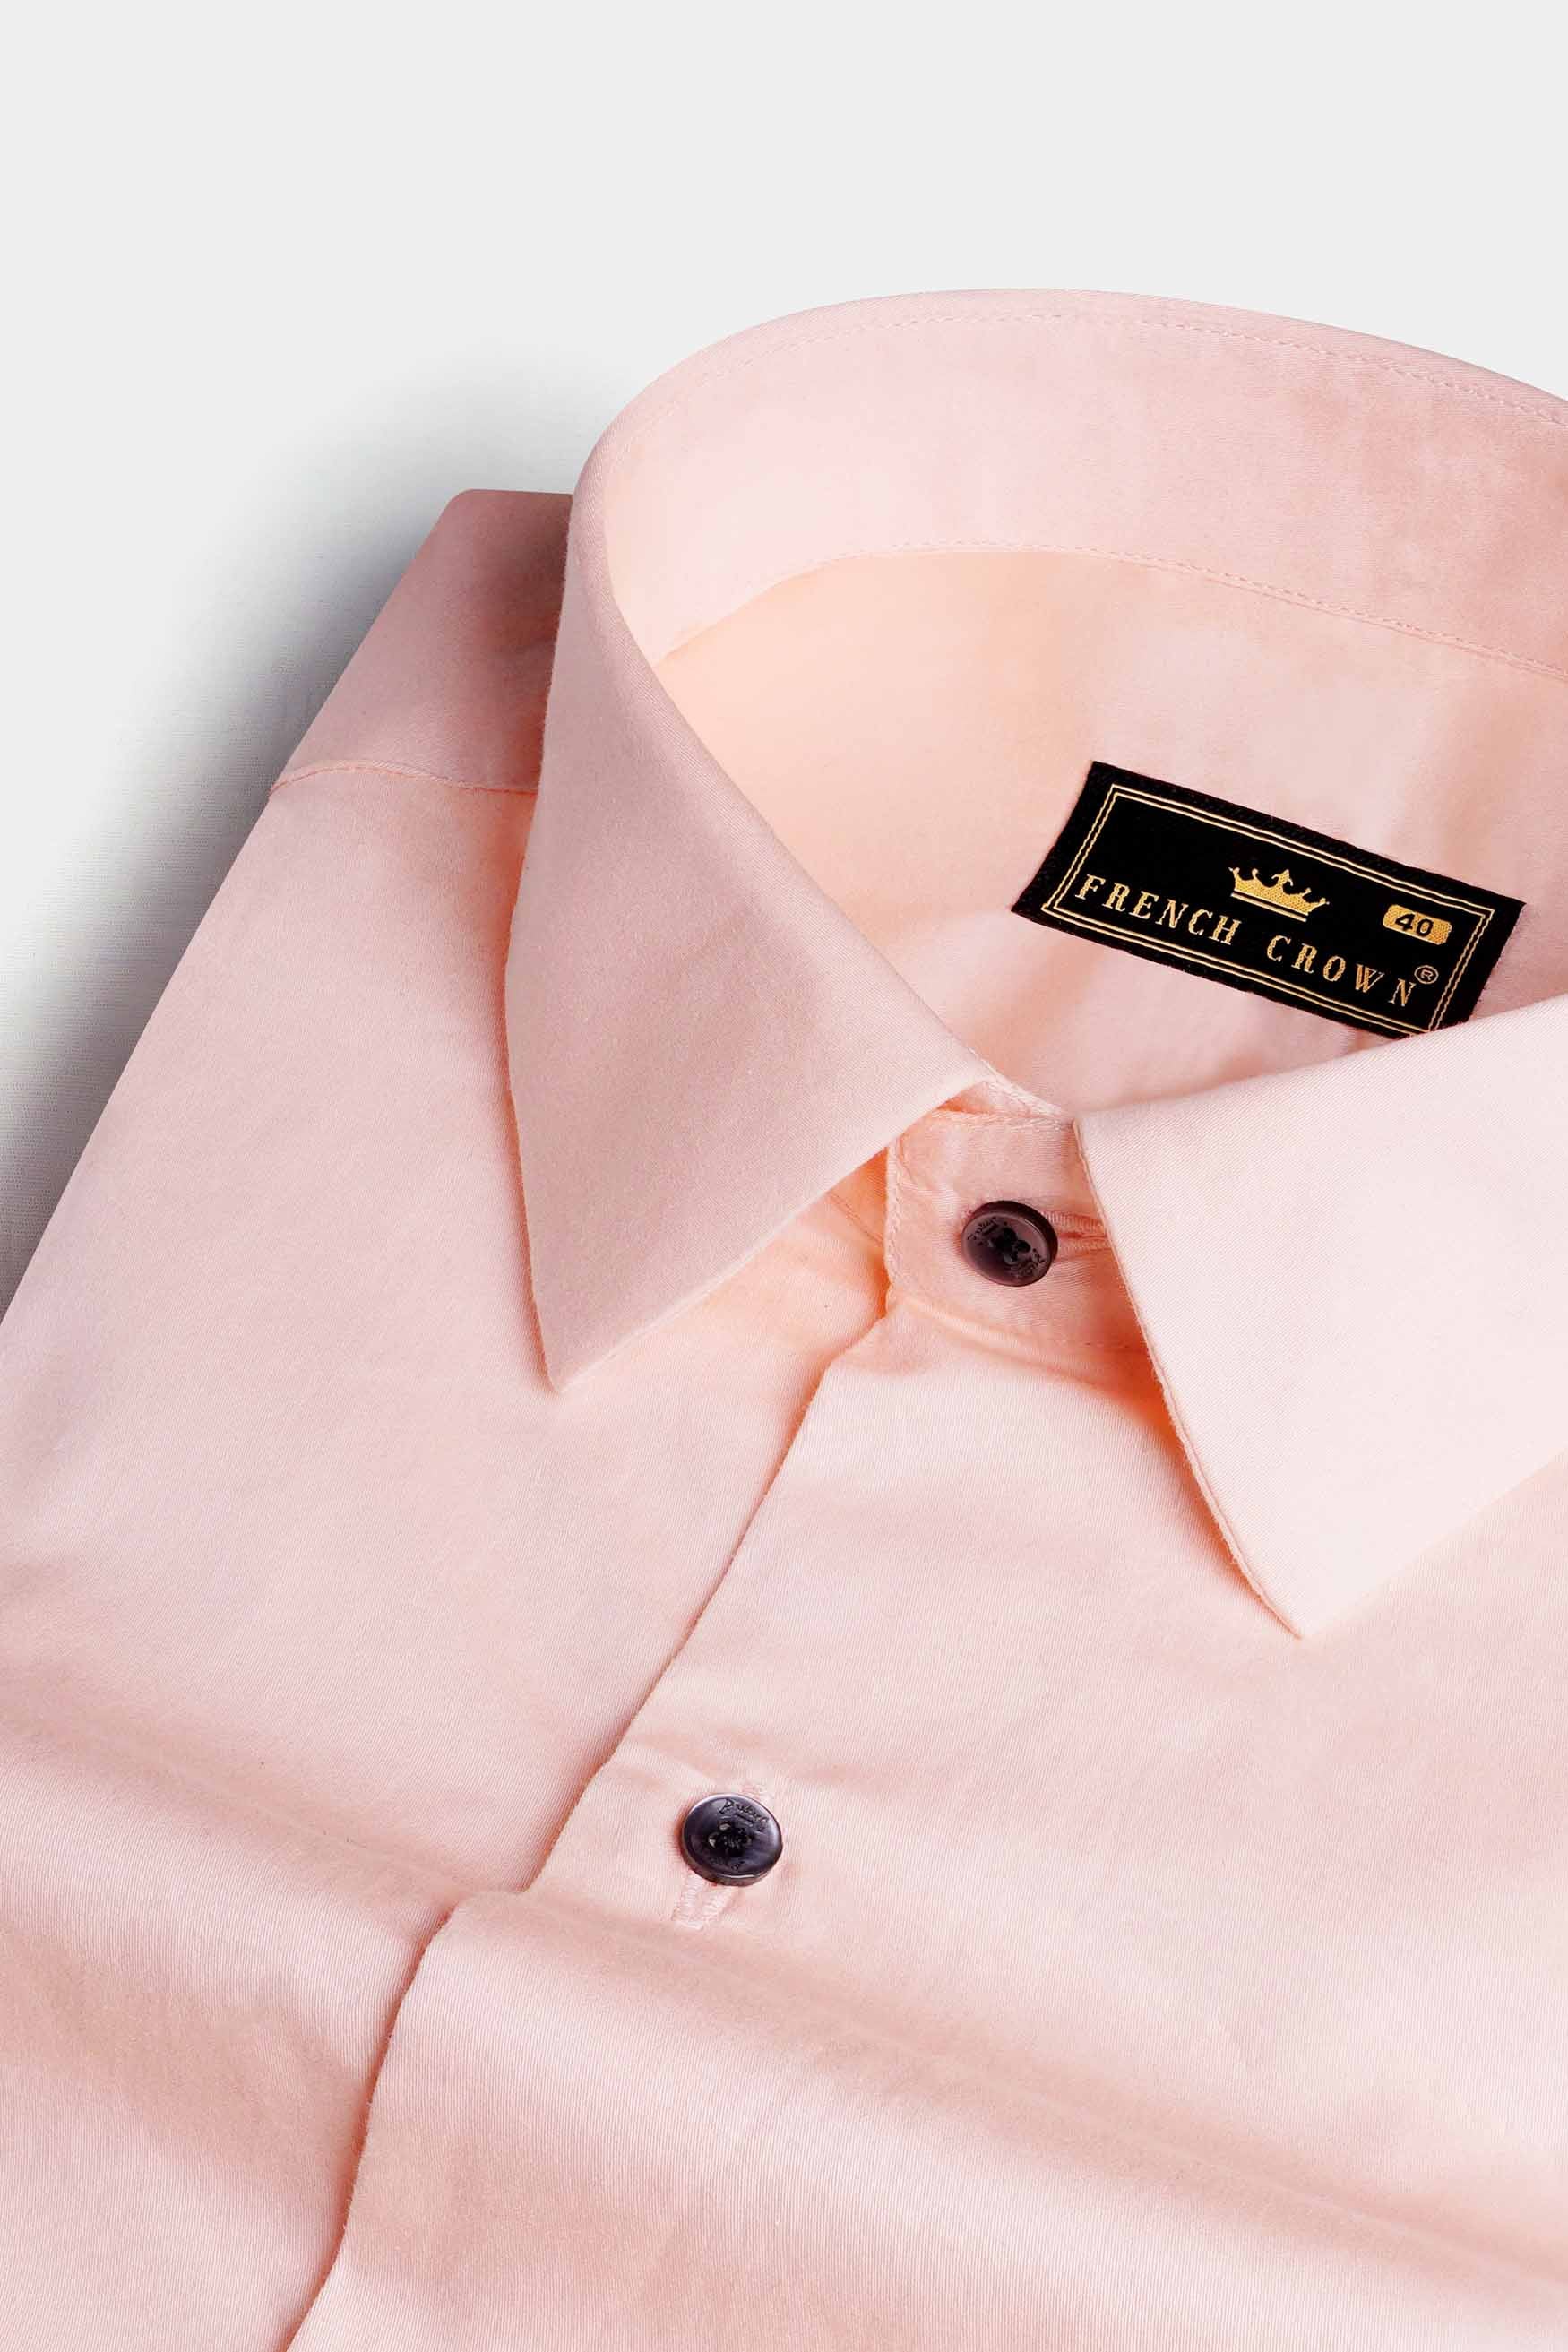 Oyster Pink Subtle Sheen Super Soft Premium Cotton Shirt